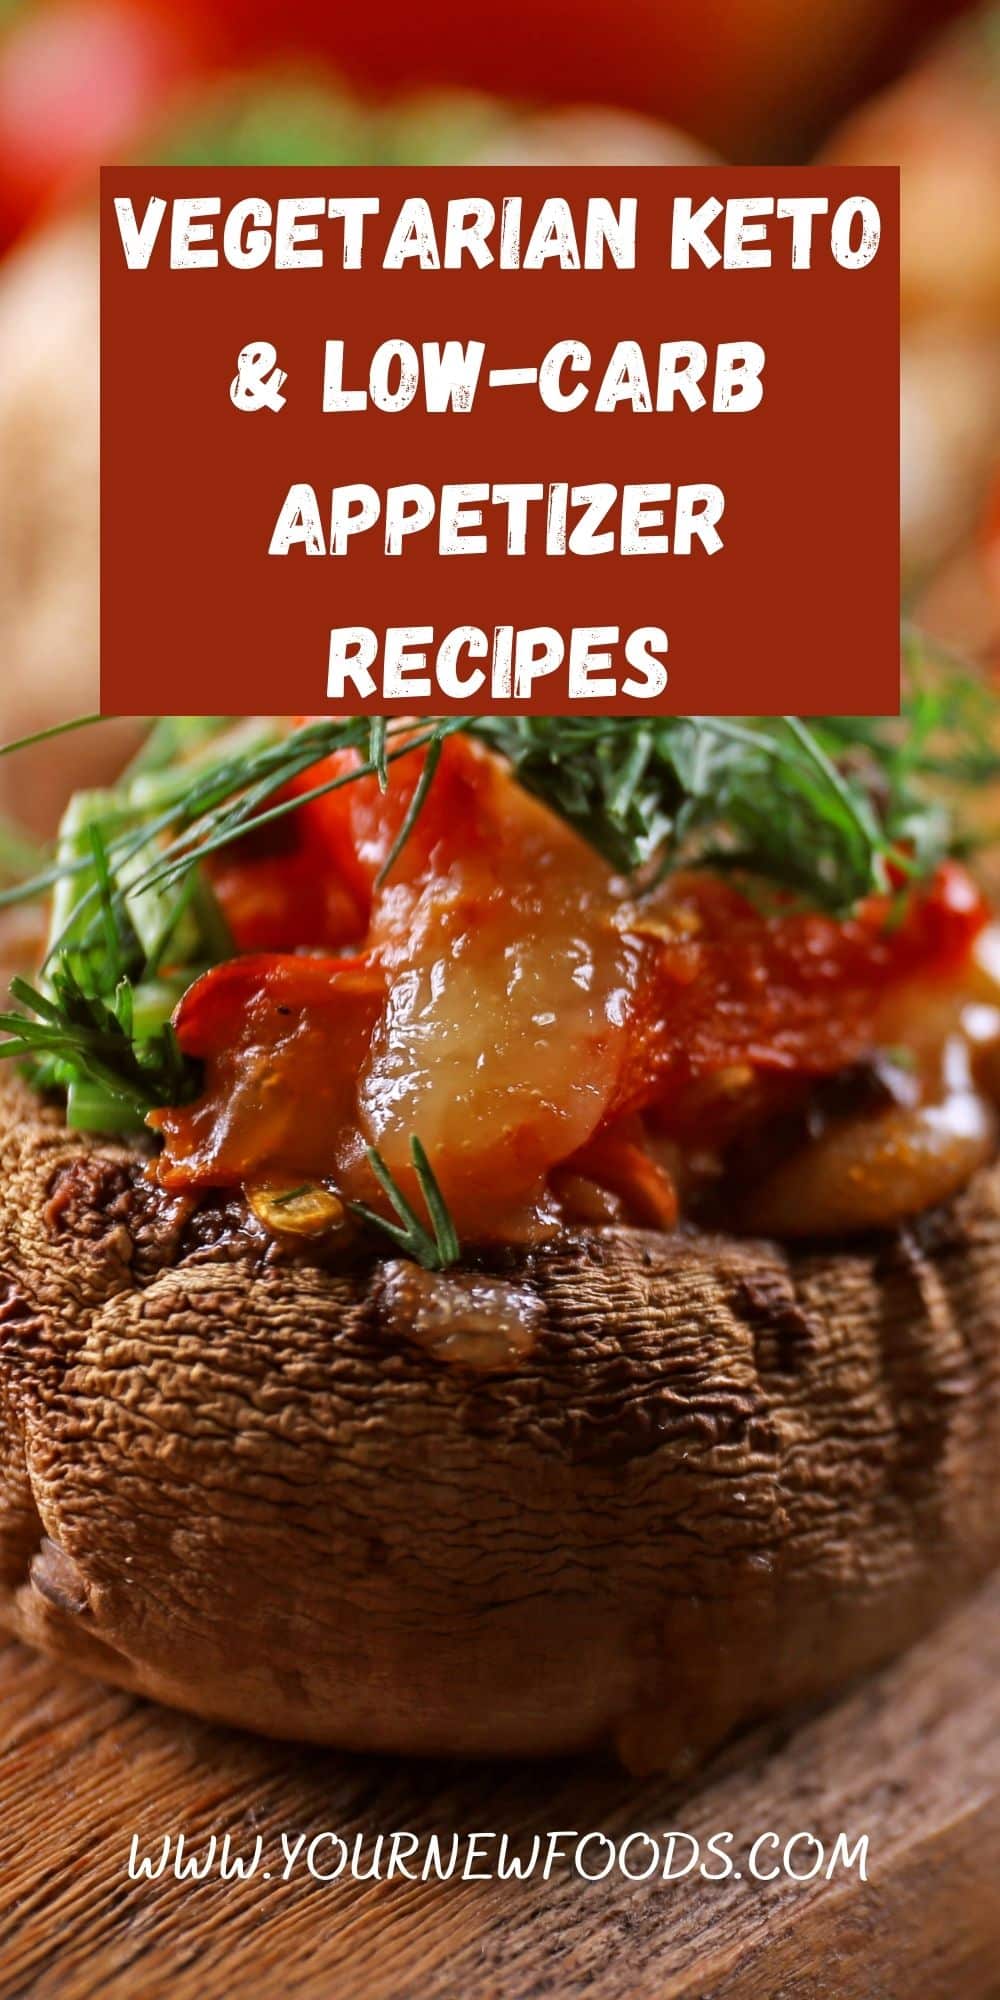 Vegetarian Keto & Low-Carb Appetizer Recipes